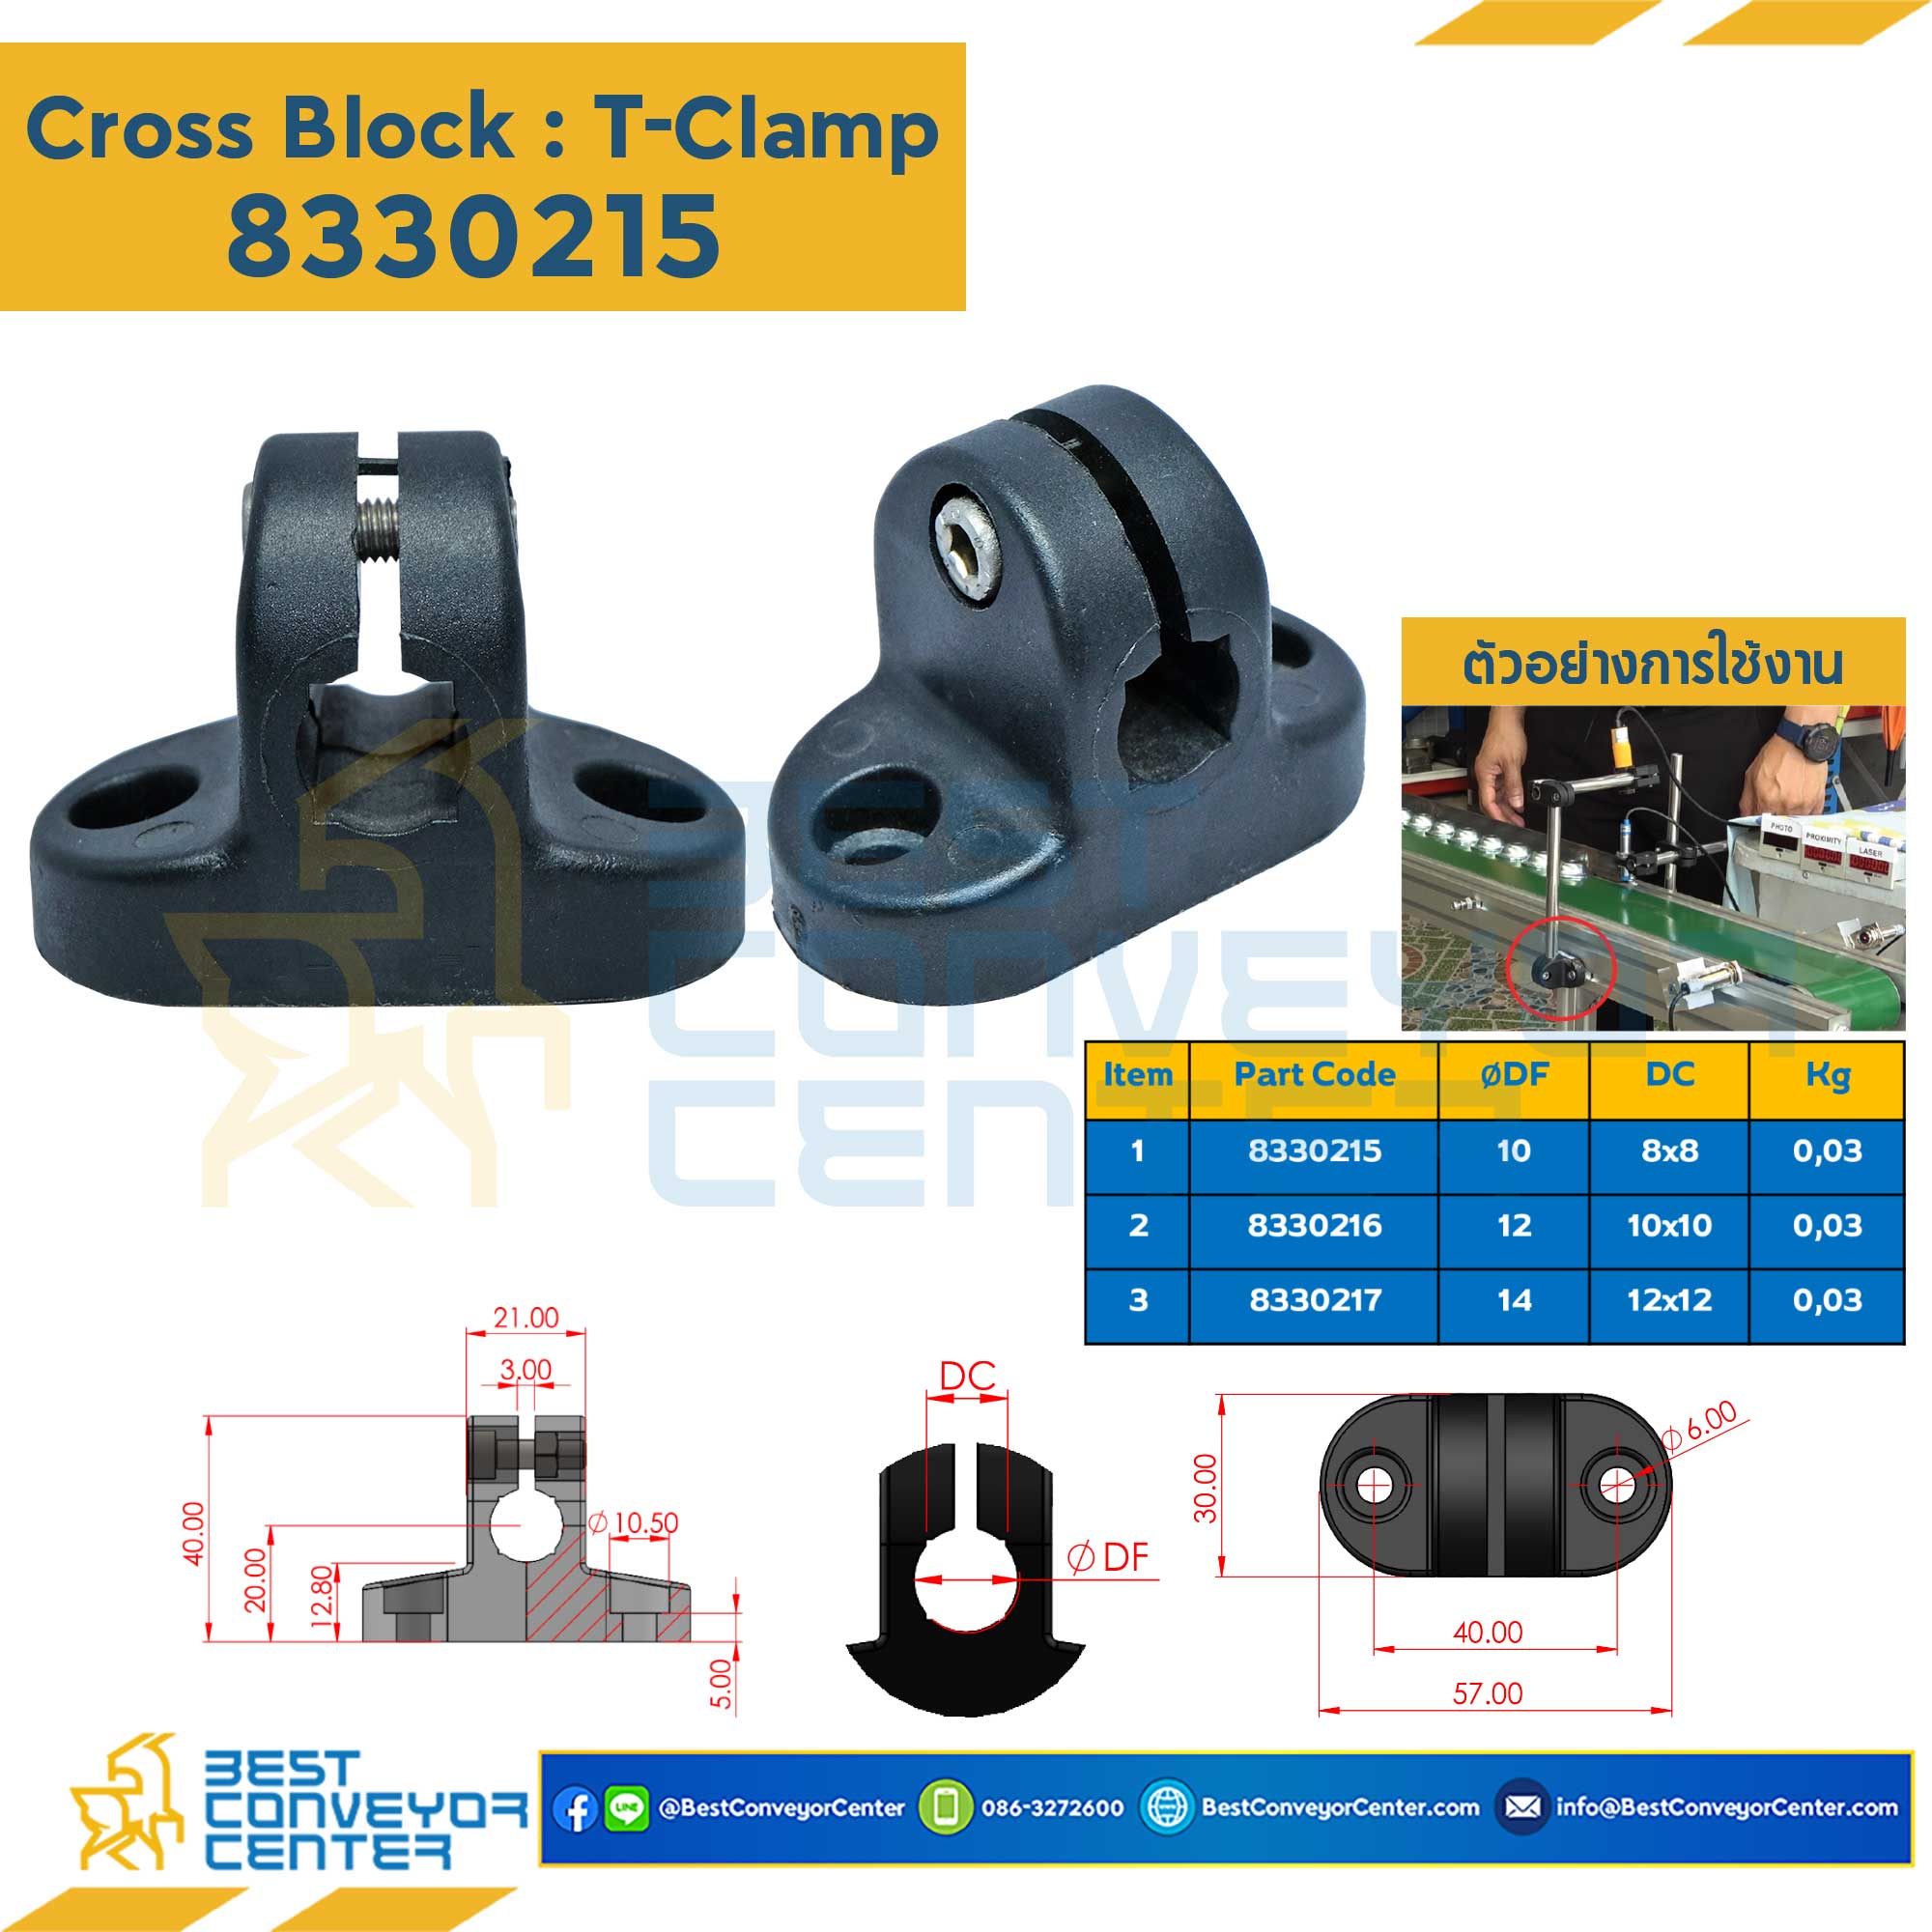 Cross Block : T-Clamp